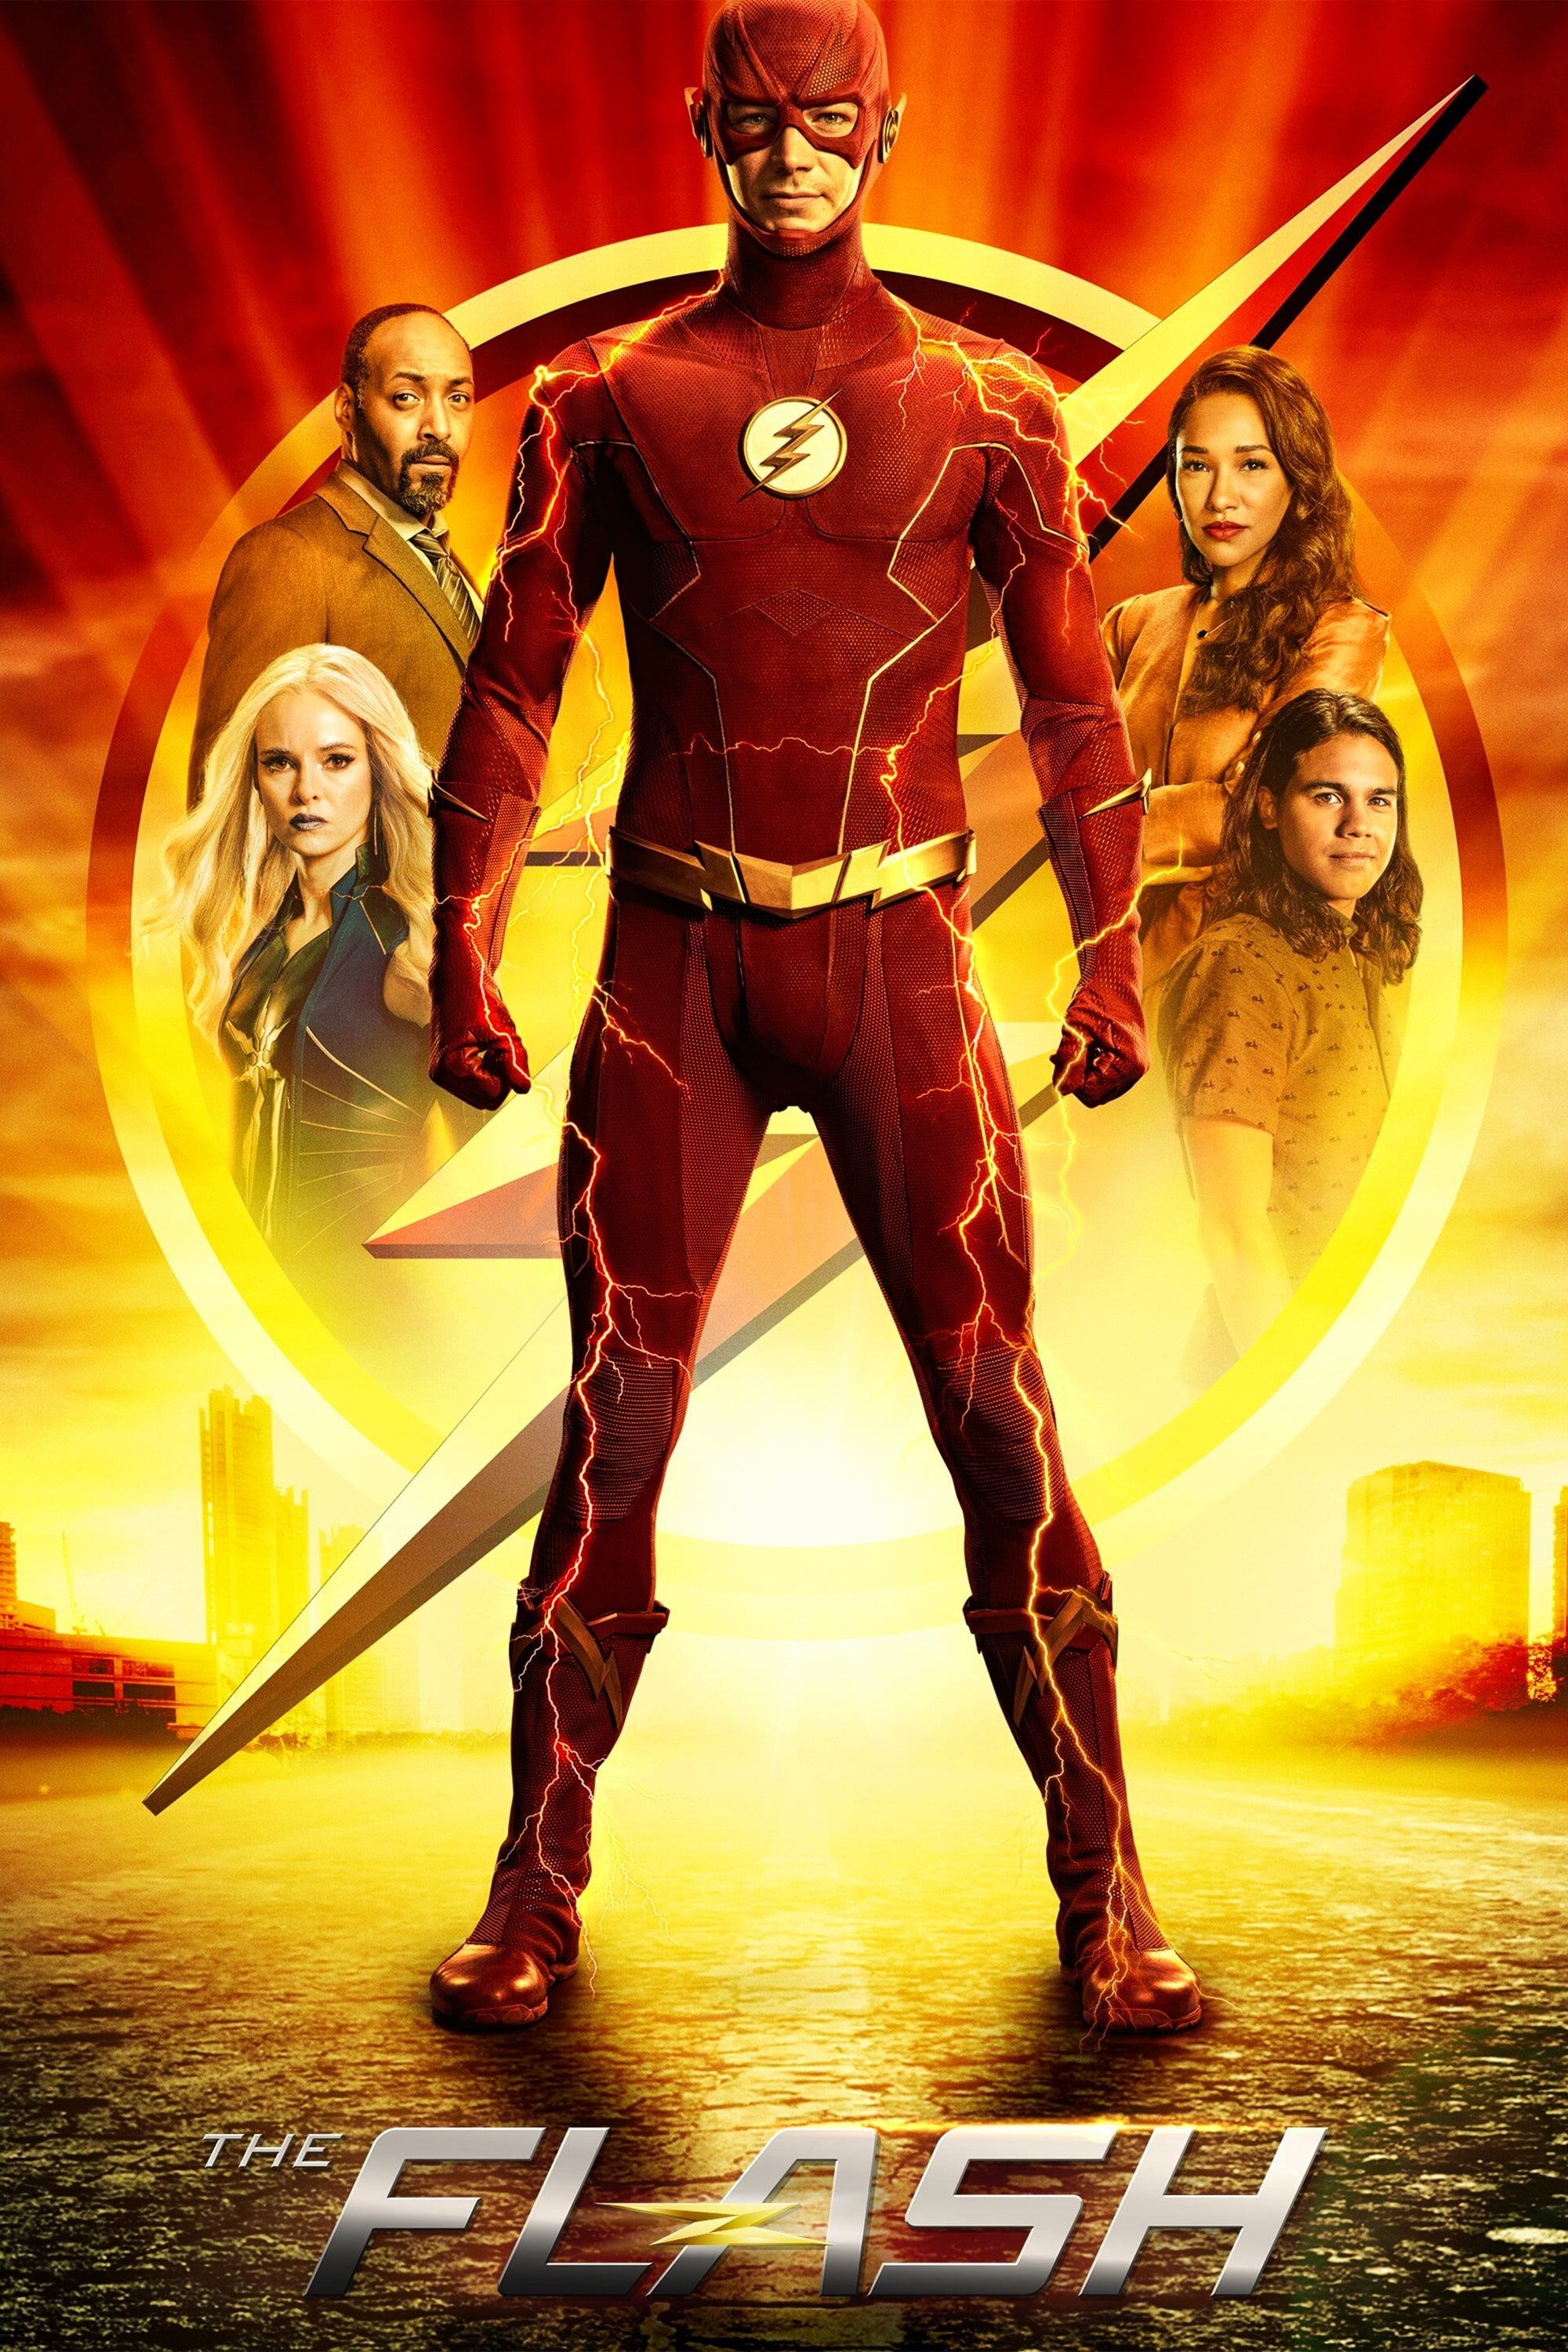 The flash season 5 free online - jzaside